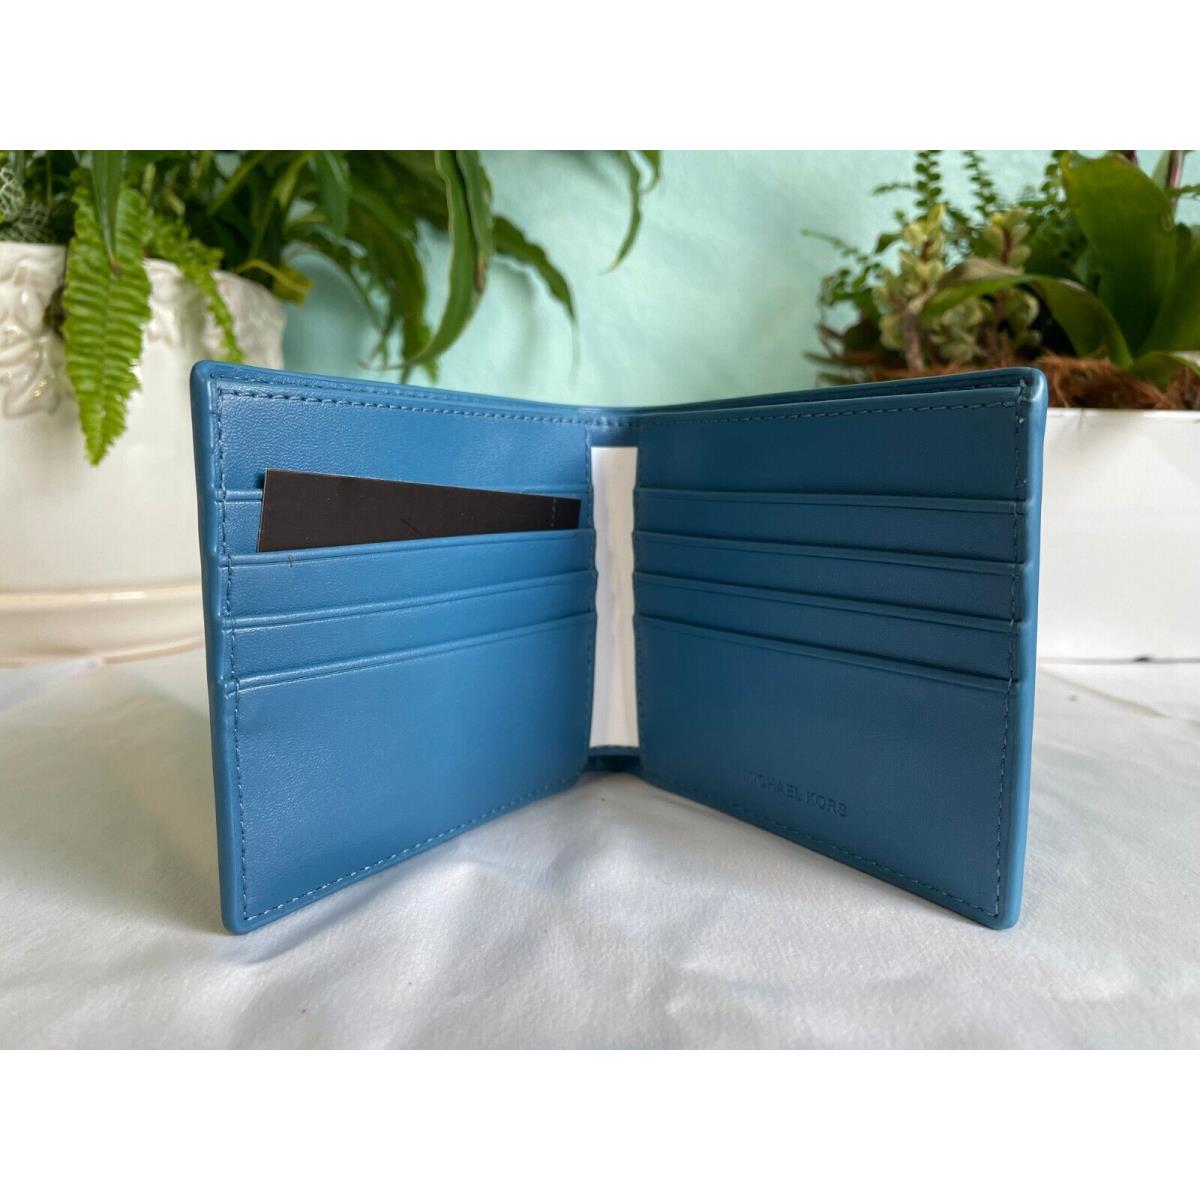 Michael Kors wallet  - Black / Blue 2